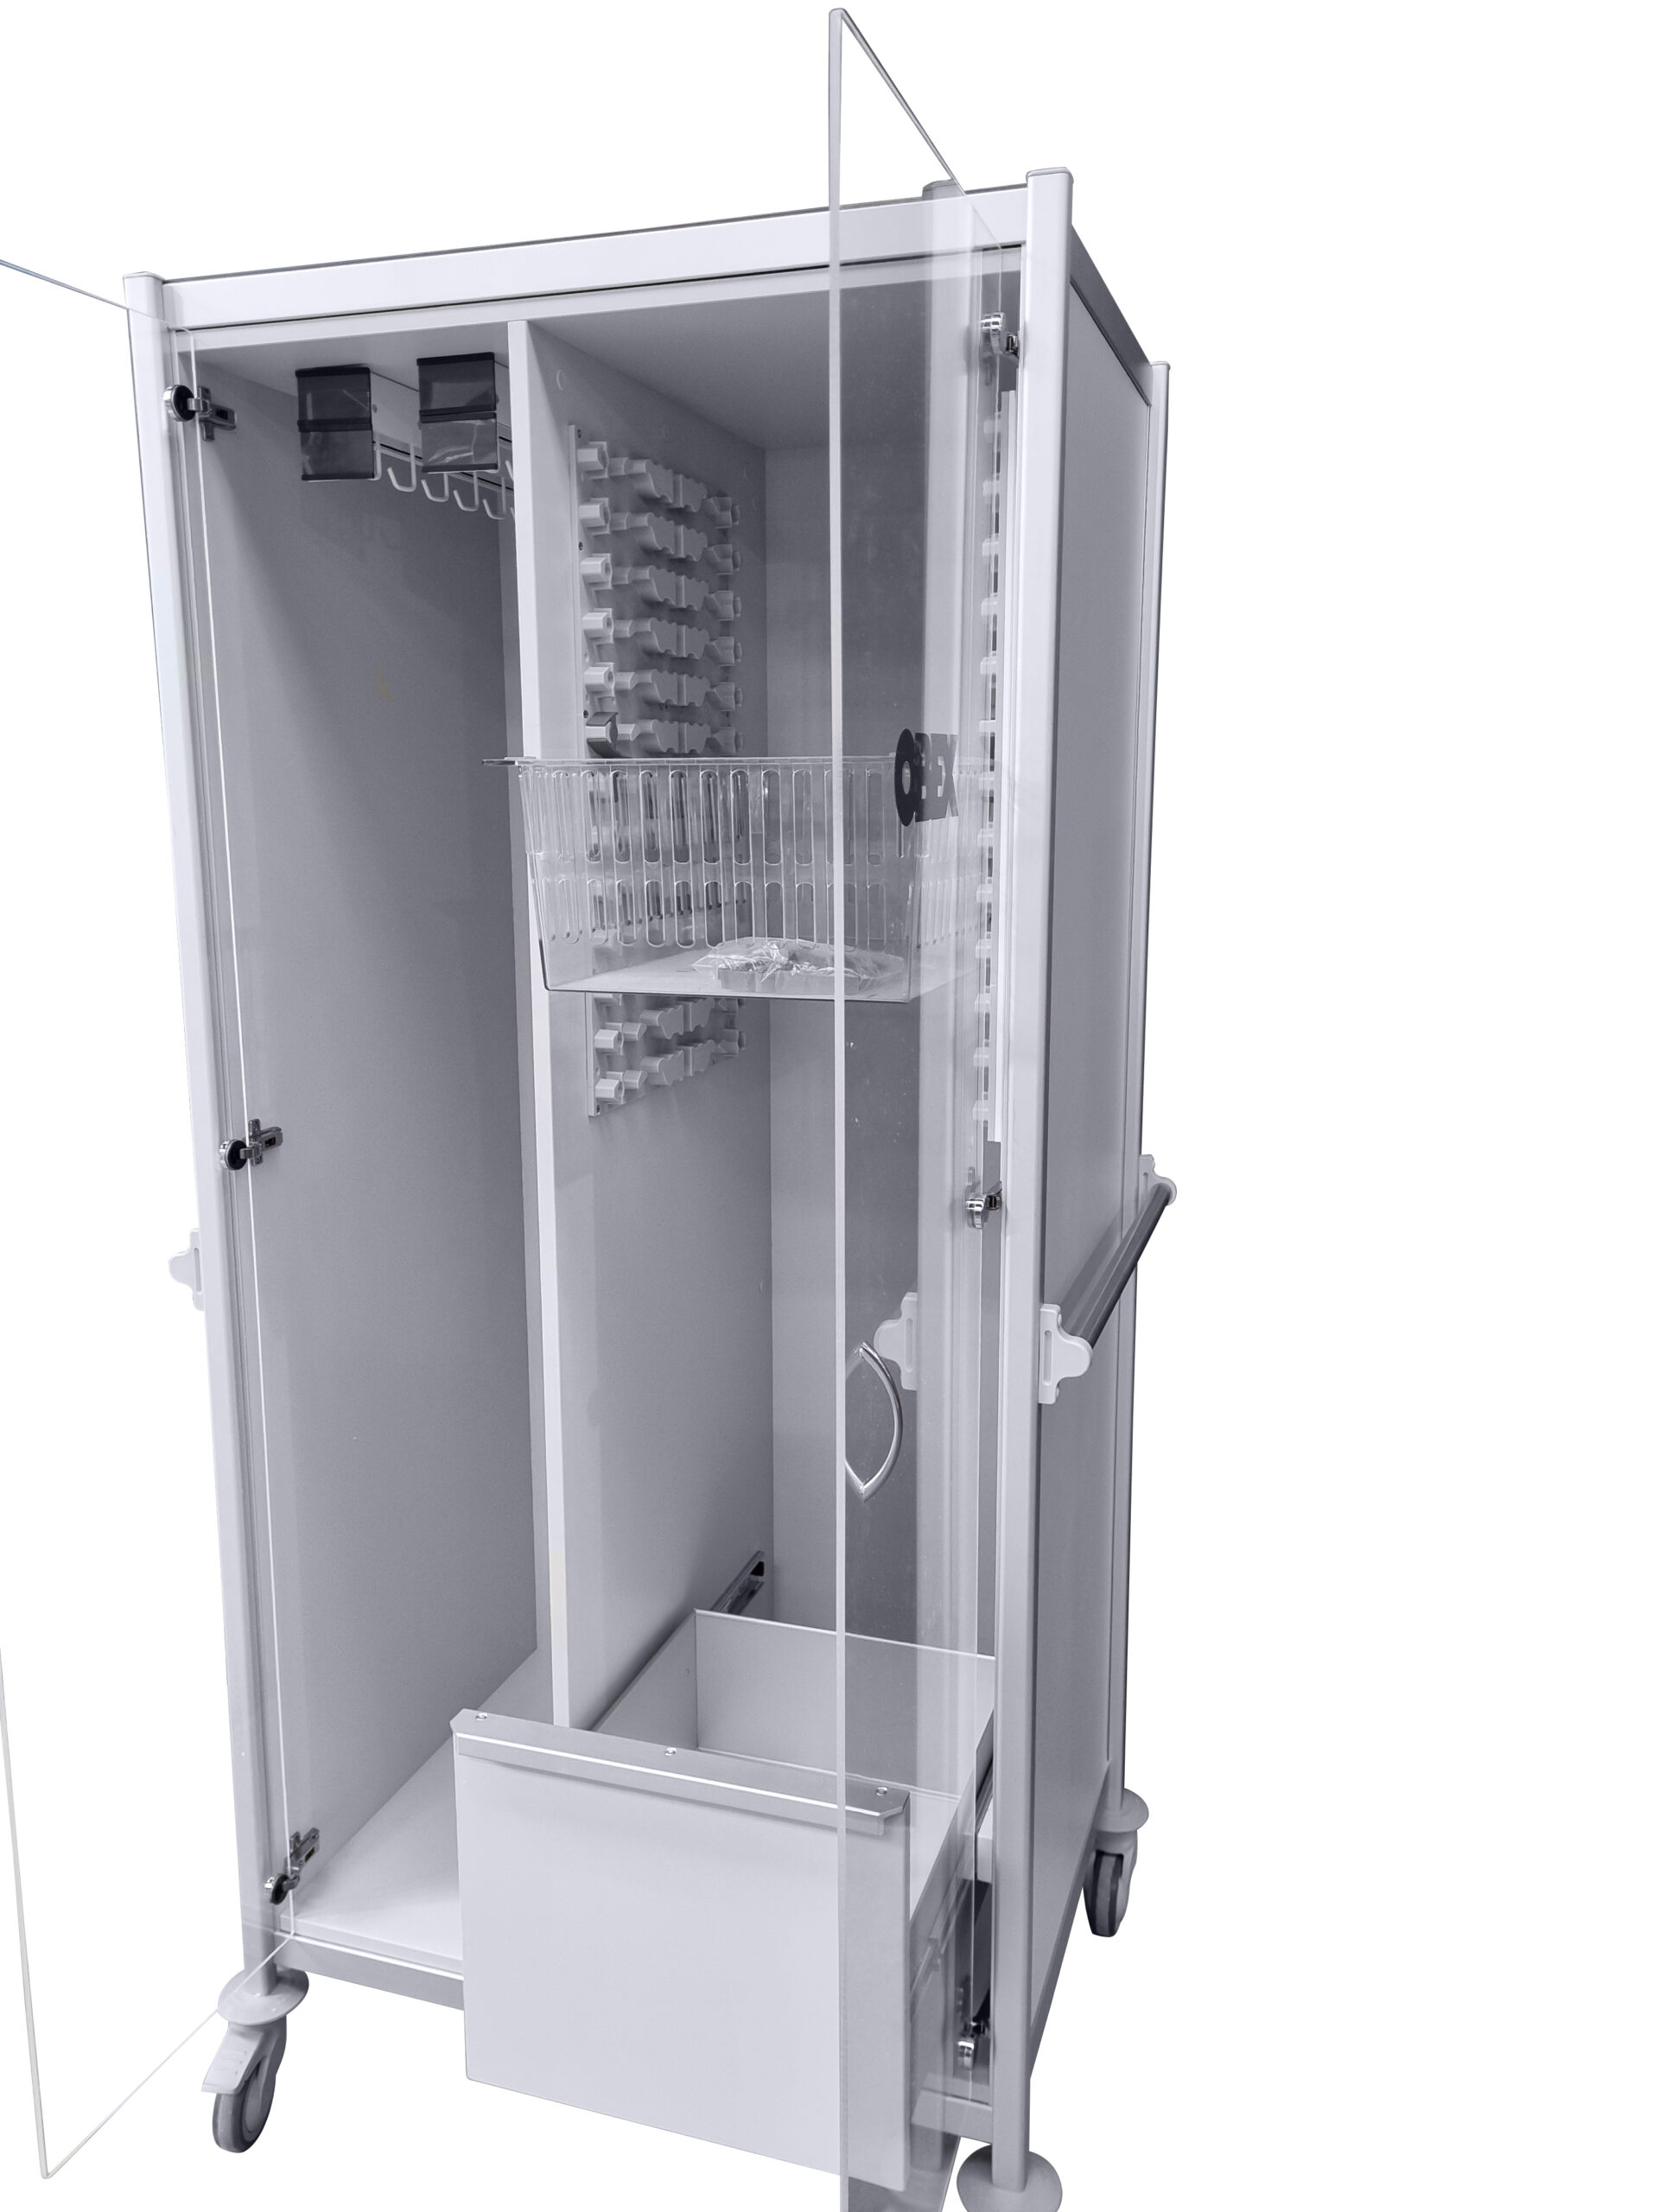 Catheter Storage unit